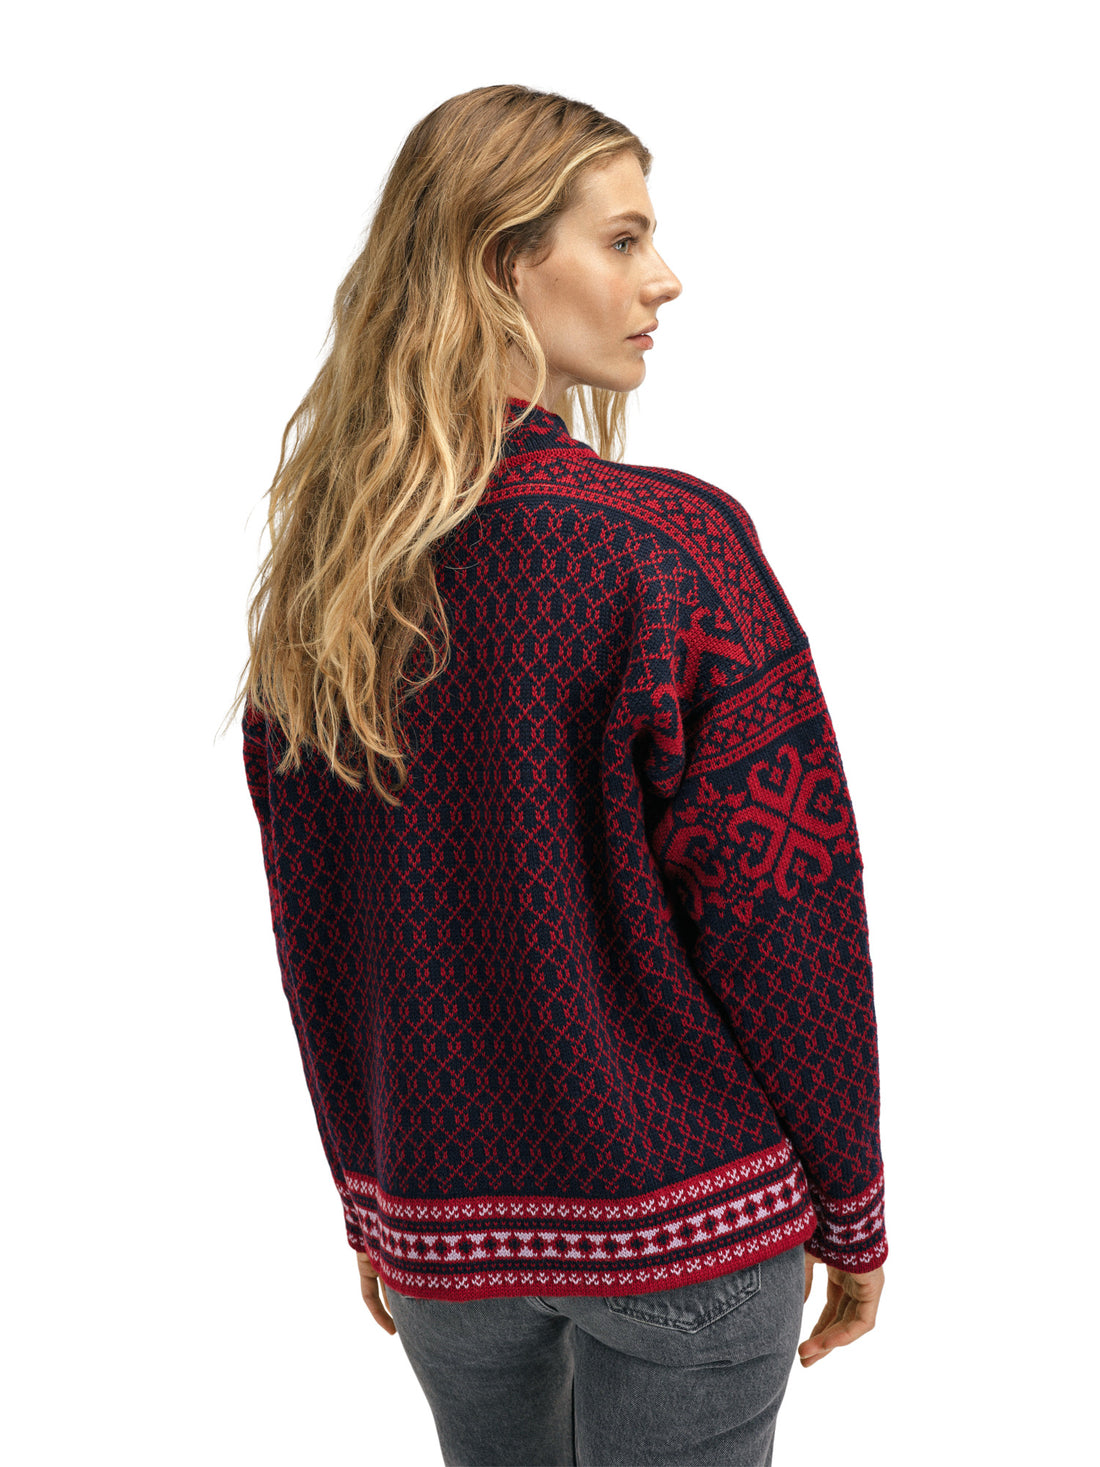 Dale of Norway - Leknes Women's Sweater - Redrose